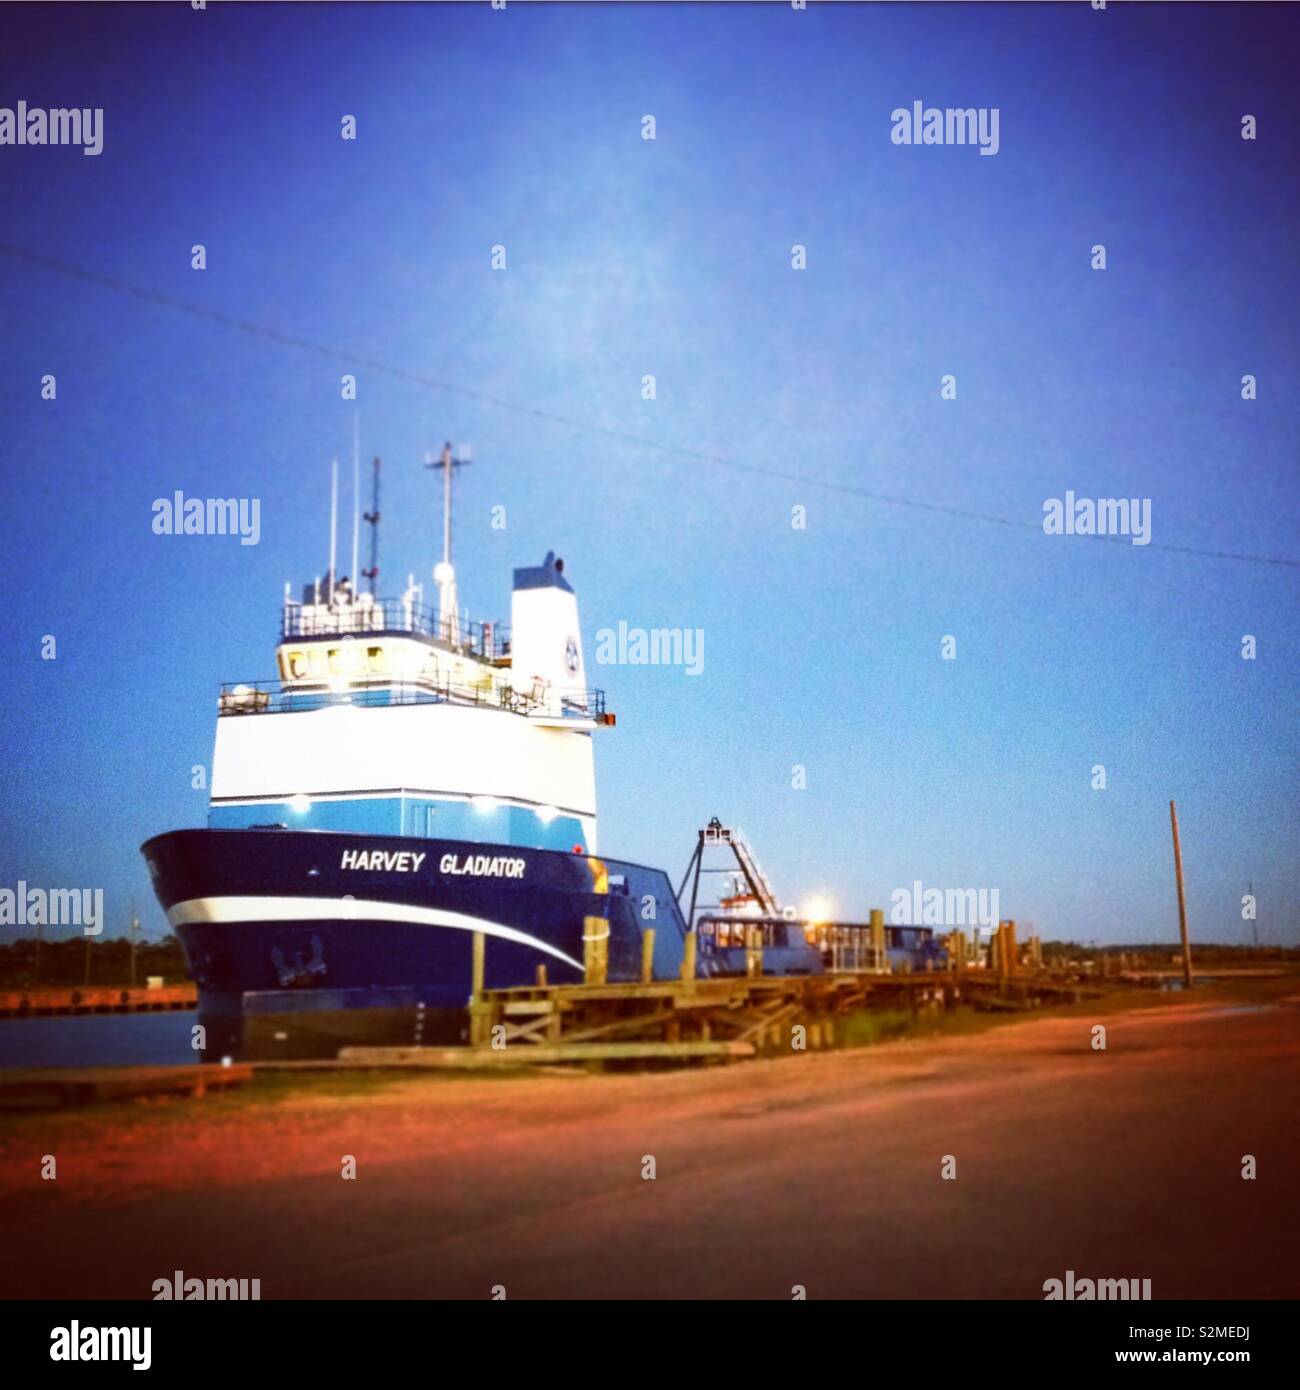 A cargo ship is docked in Bayou La Batre, Alabama. Stock Photo